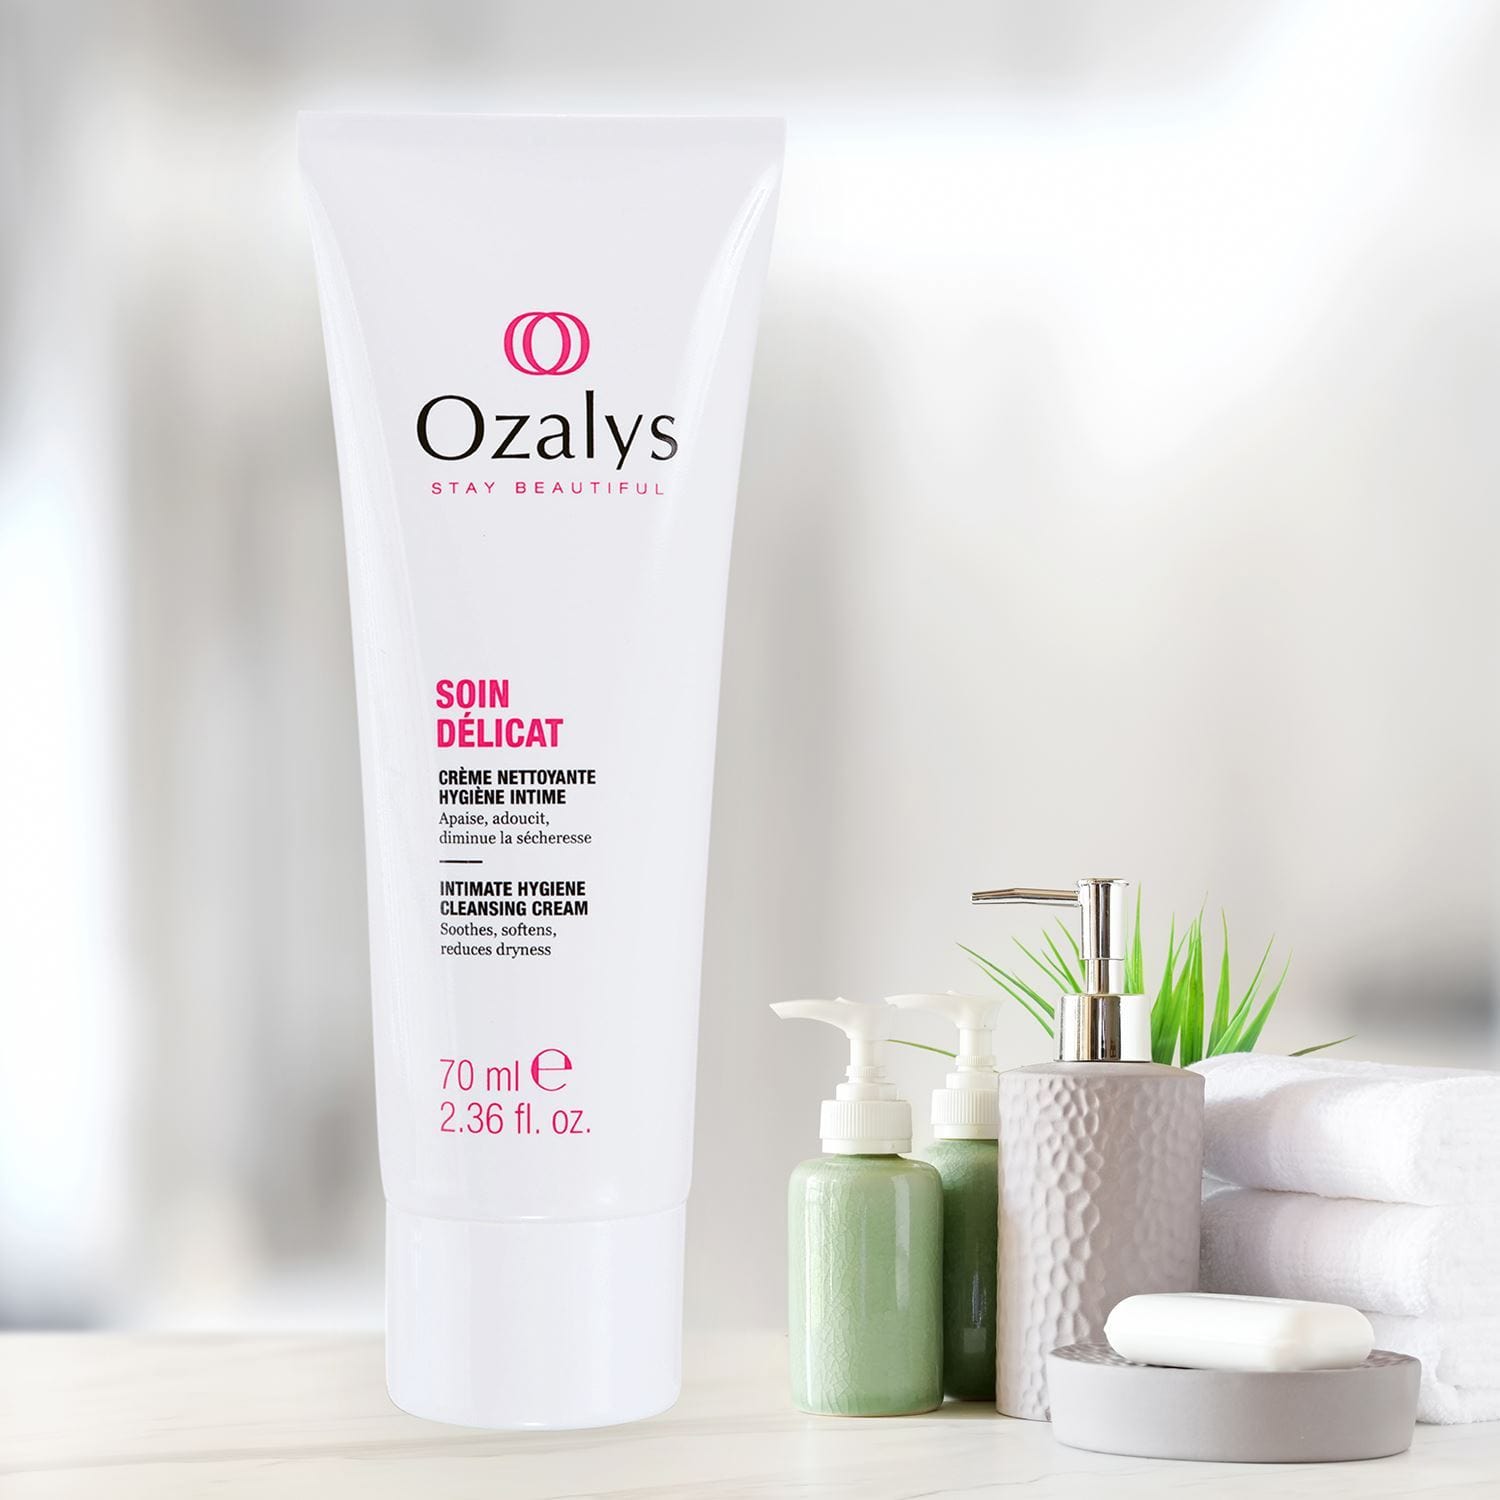 Ozalys Delicate Care Intimate Hygiene Cleansing Cream 70ml